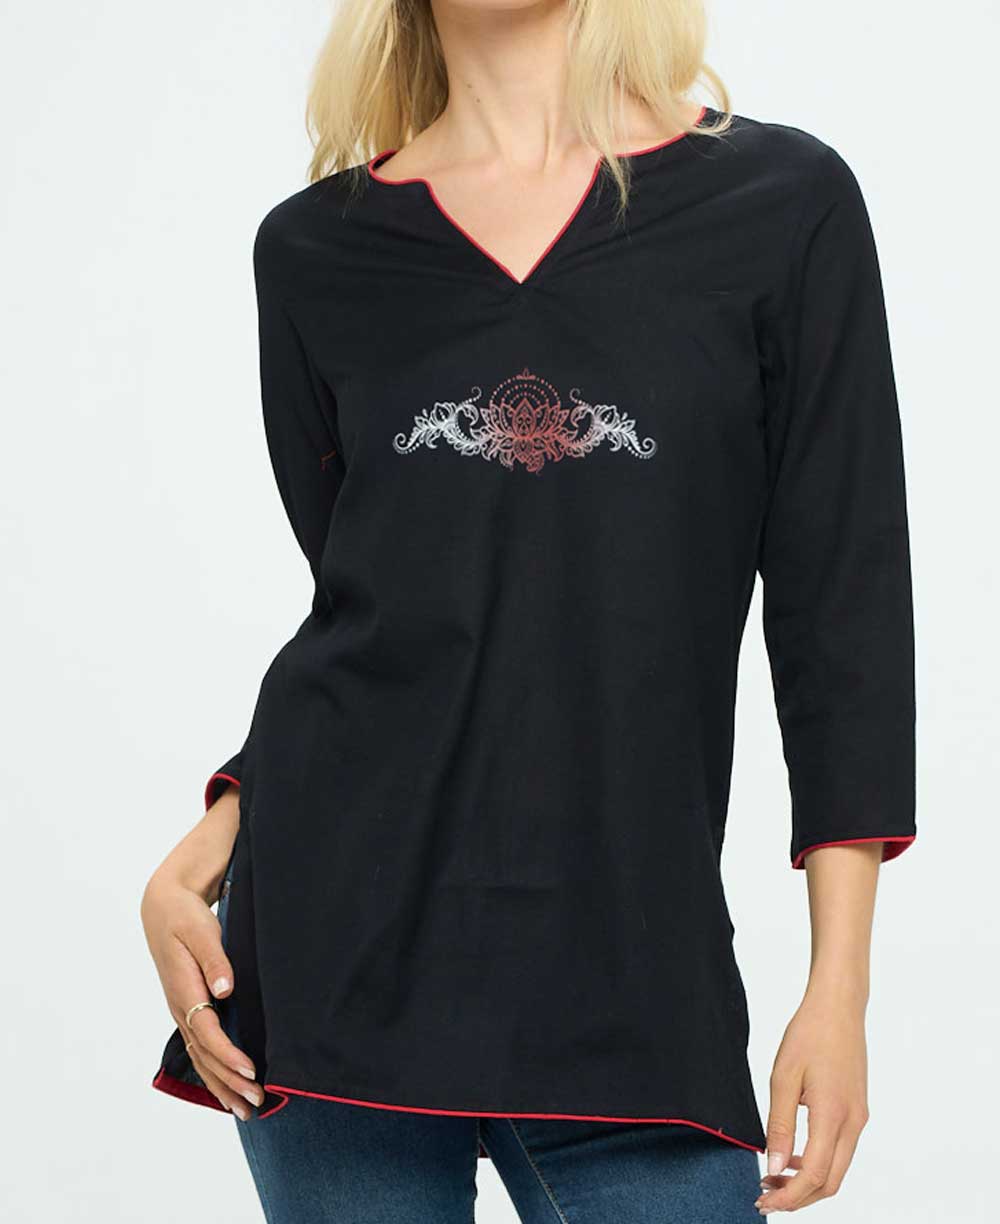 Long Sleeve T-shirt, Cotton and Chiffon Tunic Top, Yoga T-shirt, Black T- shirt, Tunic Tops for Leggingsy1038 